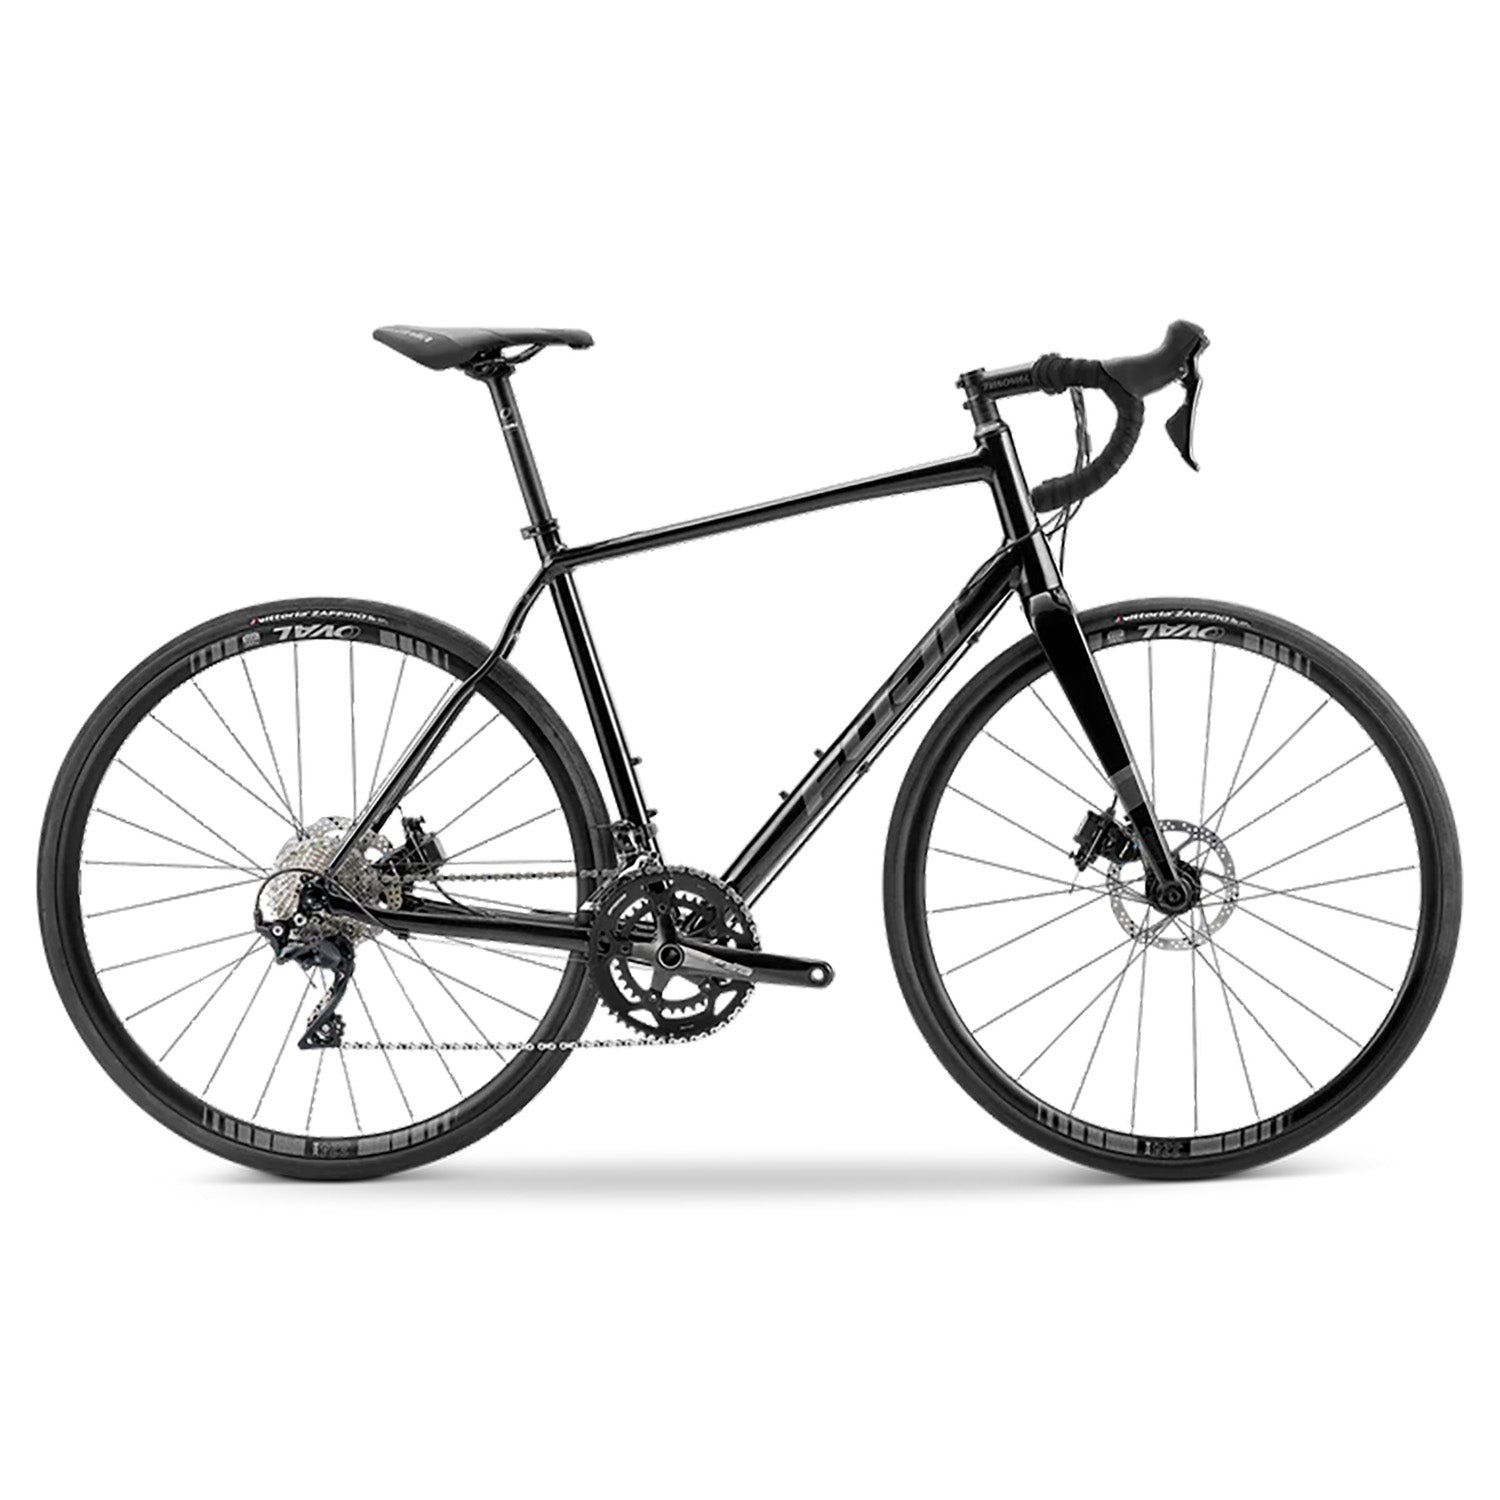 Fuji Sportif 1.1 - 46cm, Pearl Black/Charcoal, side view, Bixby Bicycles, Oklahoma